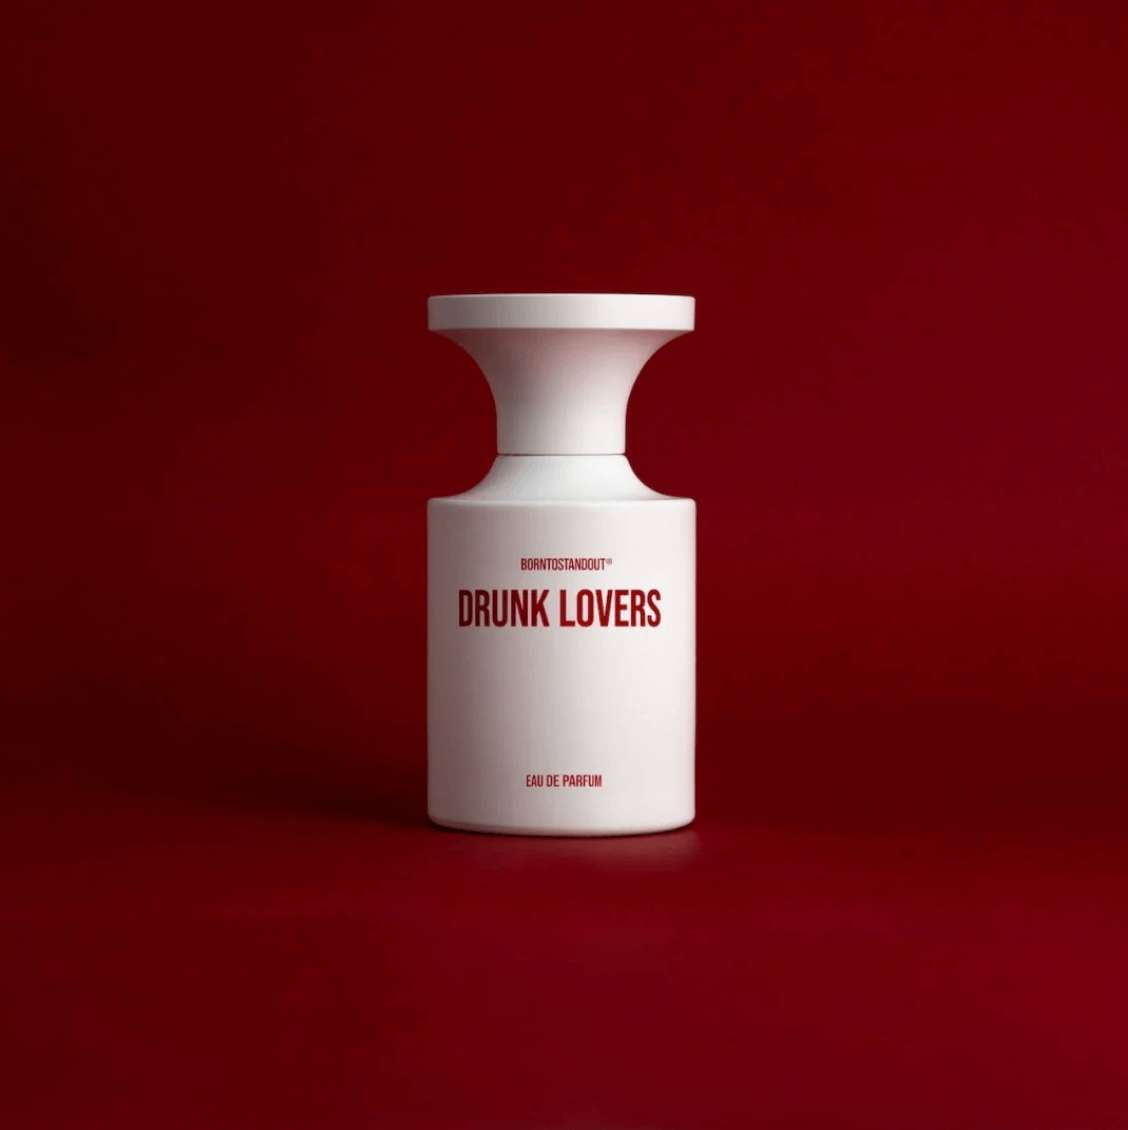 DRUNK LOVERS - BORNTOSTANDOUT - INDIEHOUSE modern fragrances